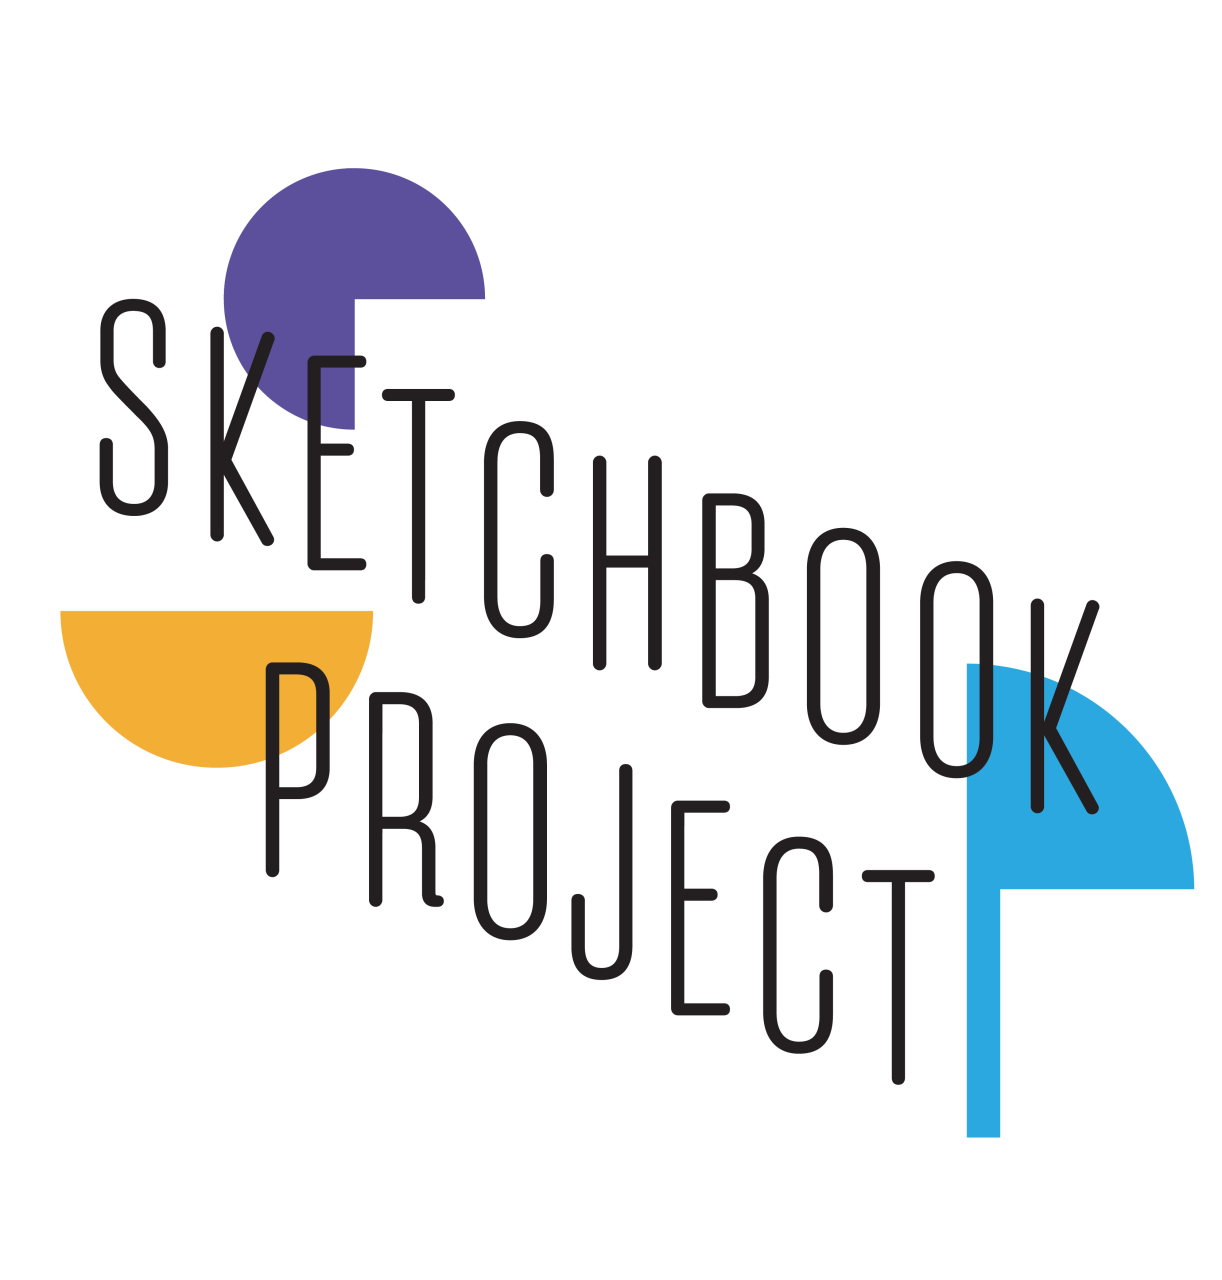 Sketchbook Project 2023